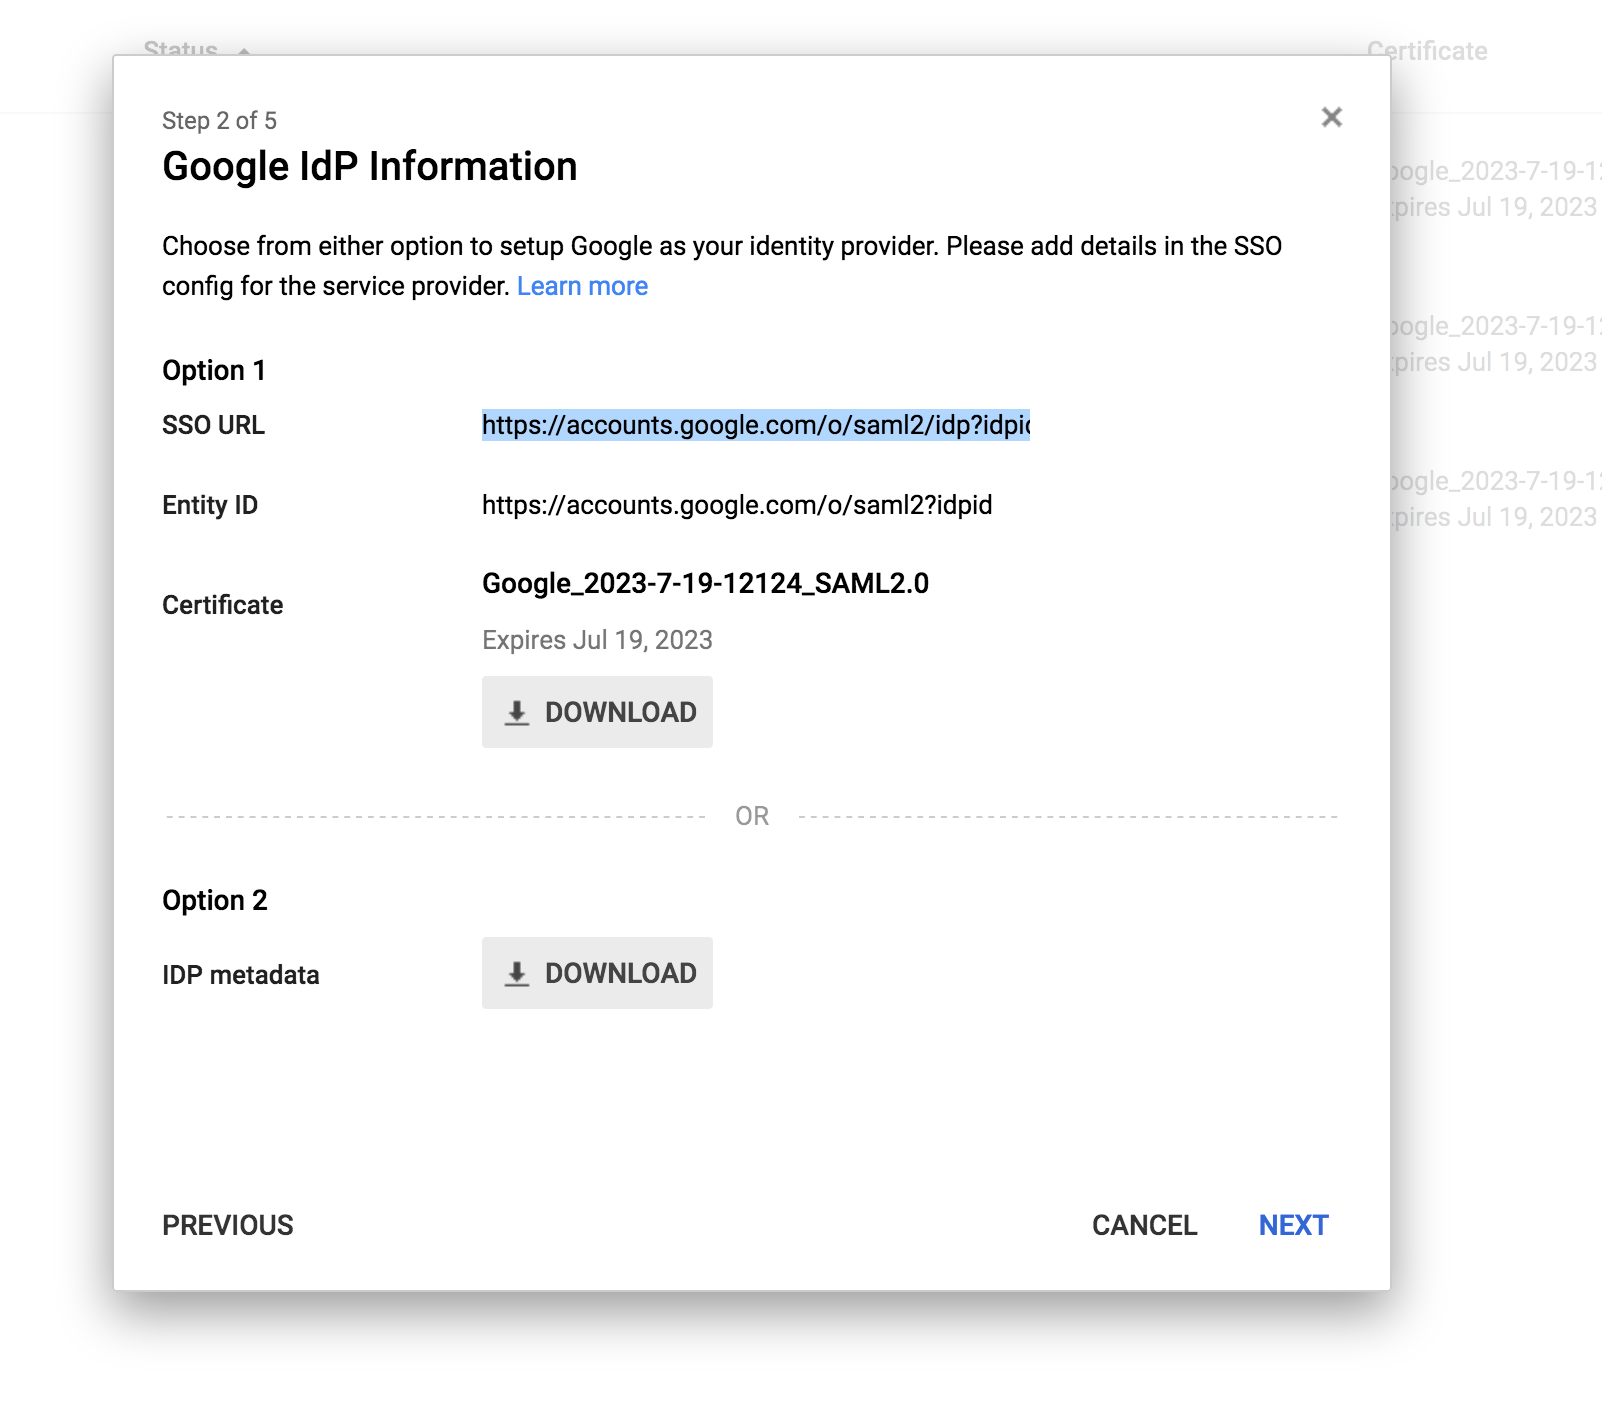 Step 2 of 5 - Google IdP information